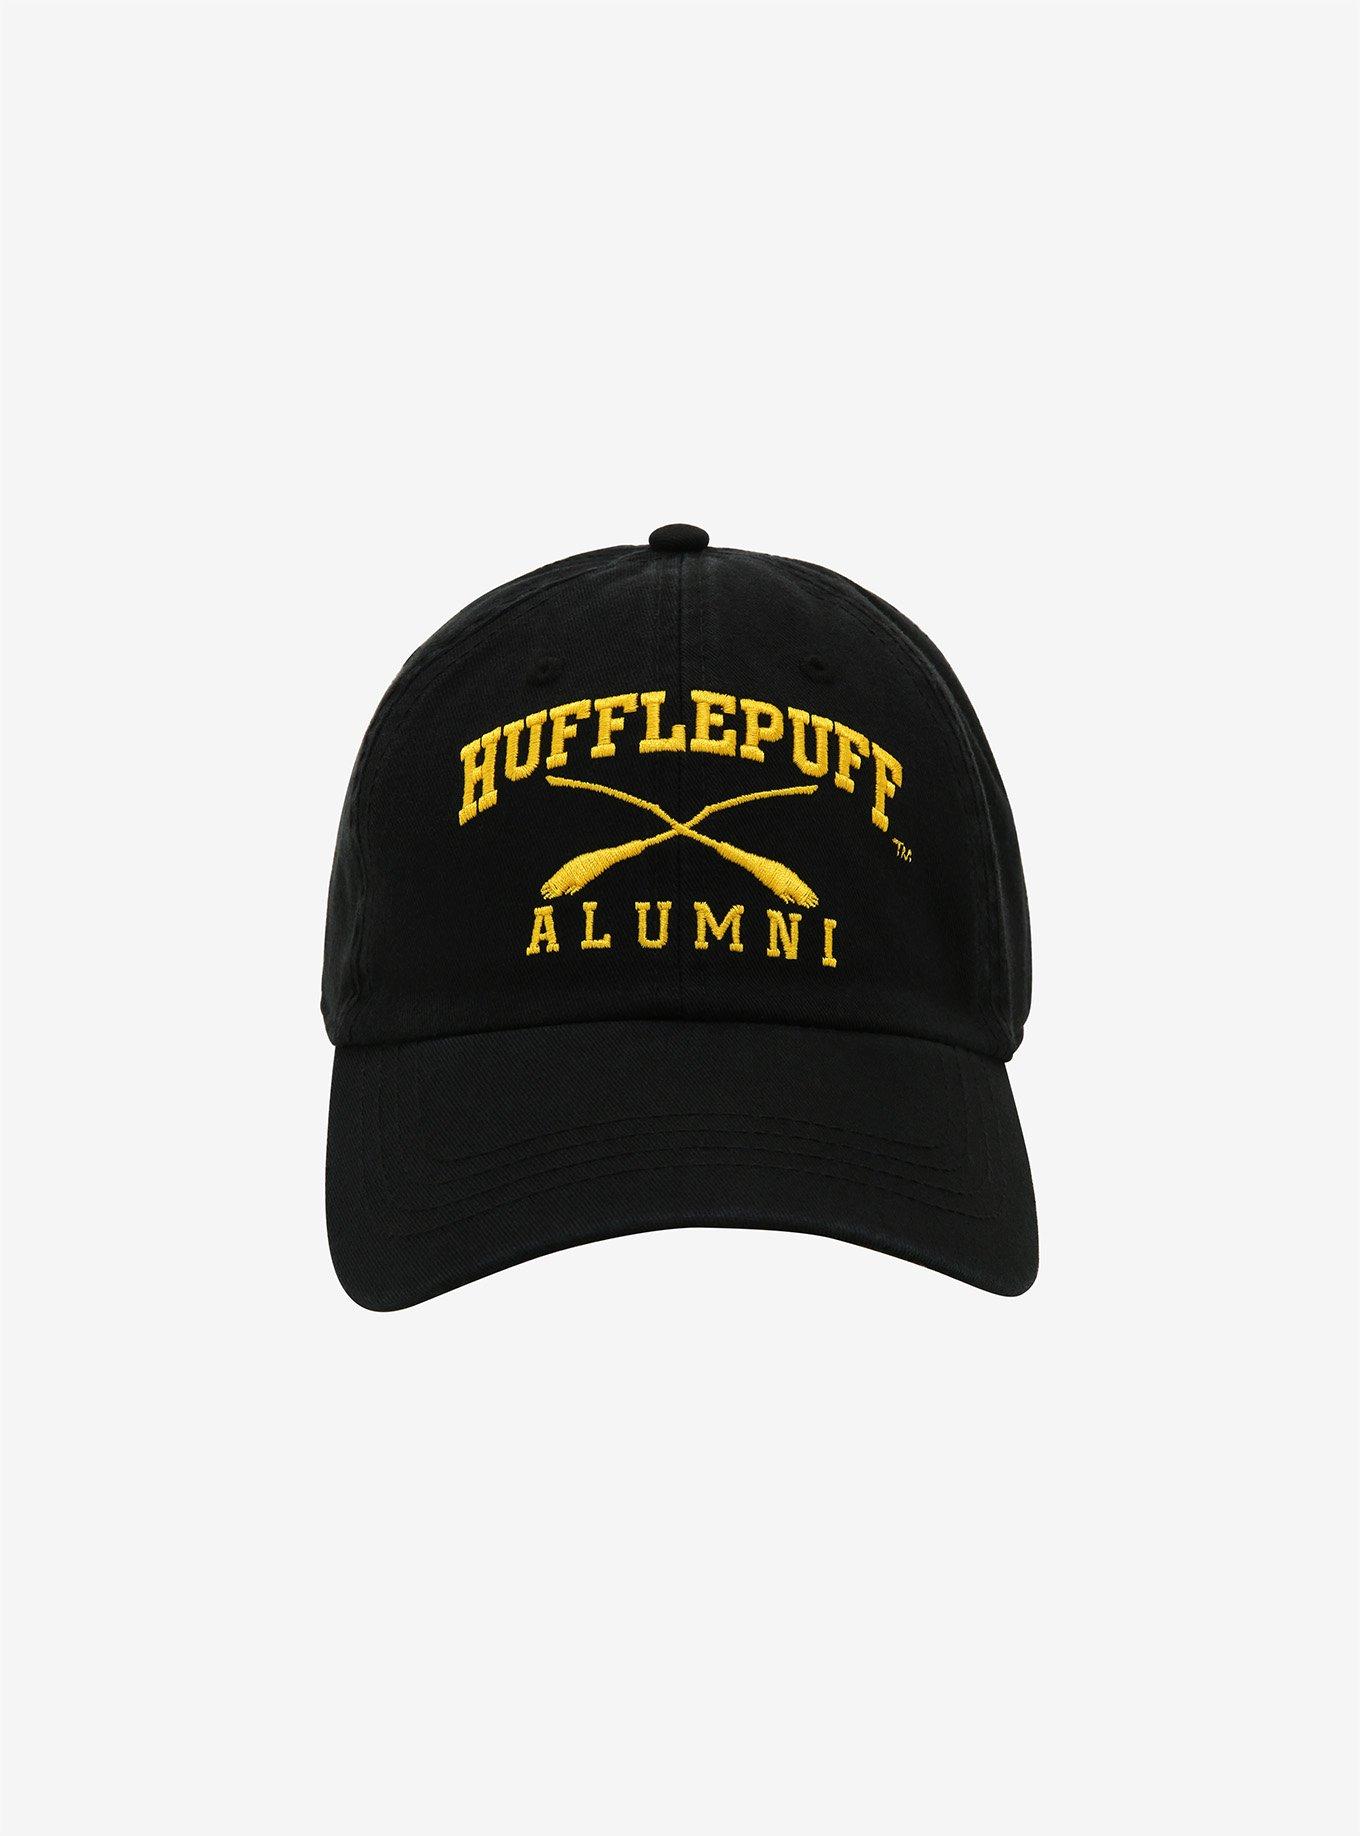 BoxLunch Cap Potter Harry - BoxLunch Alumni Exclusive | Hufflepuff